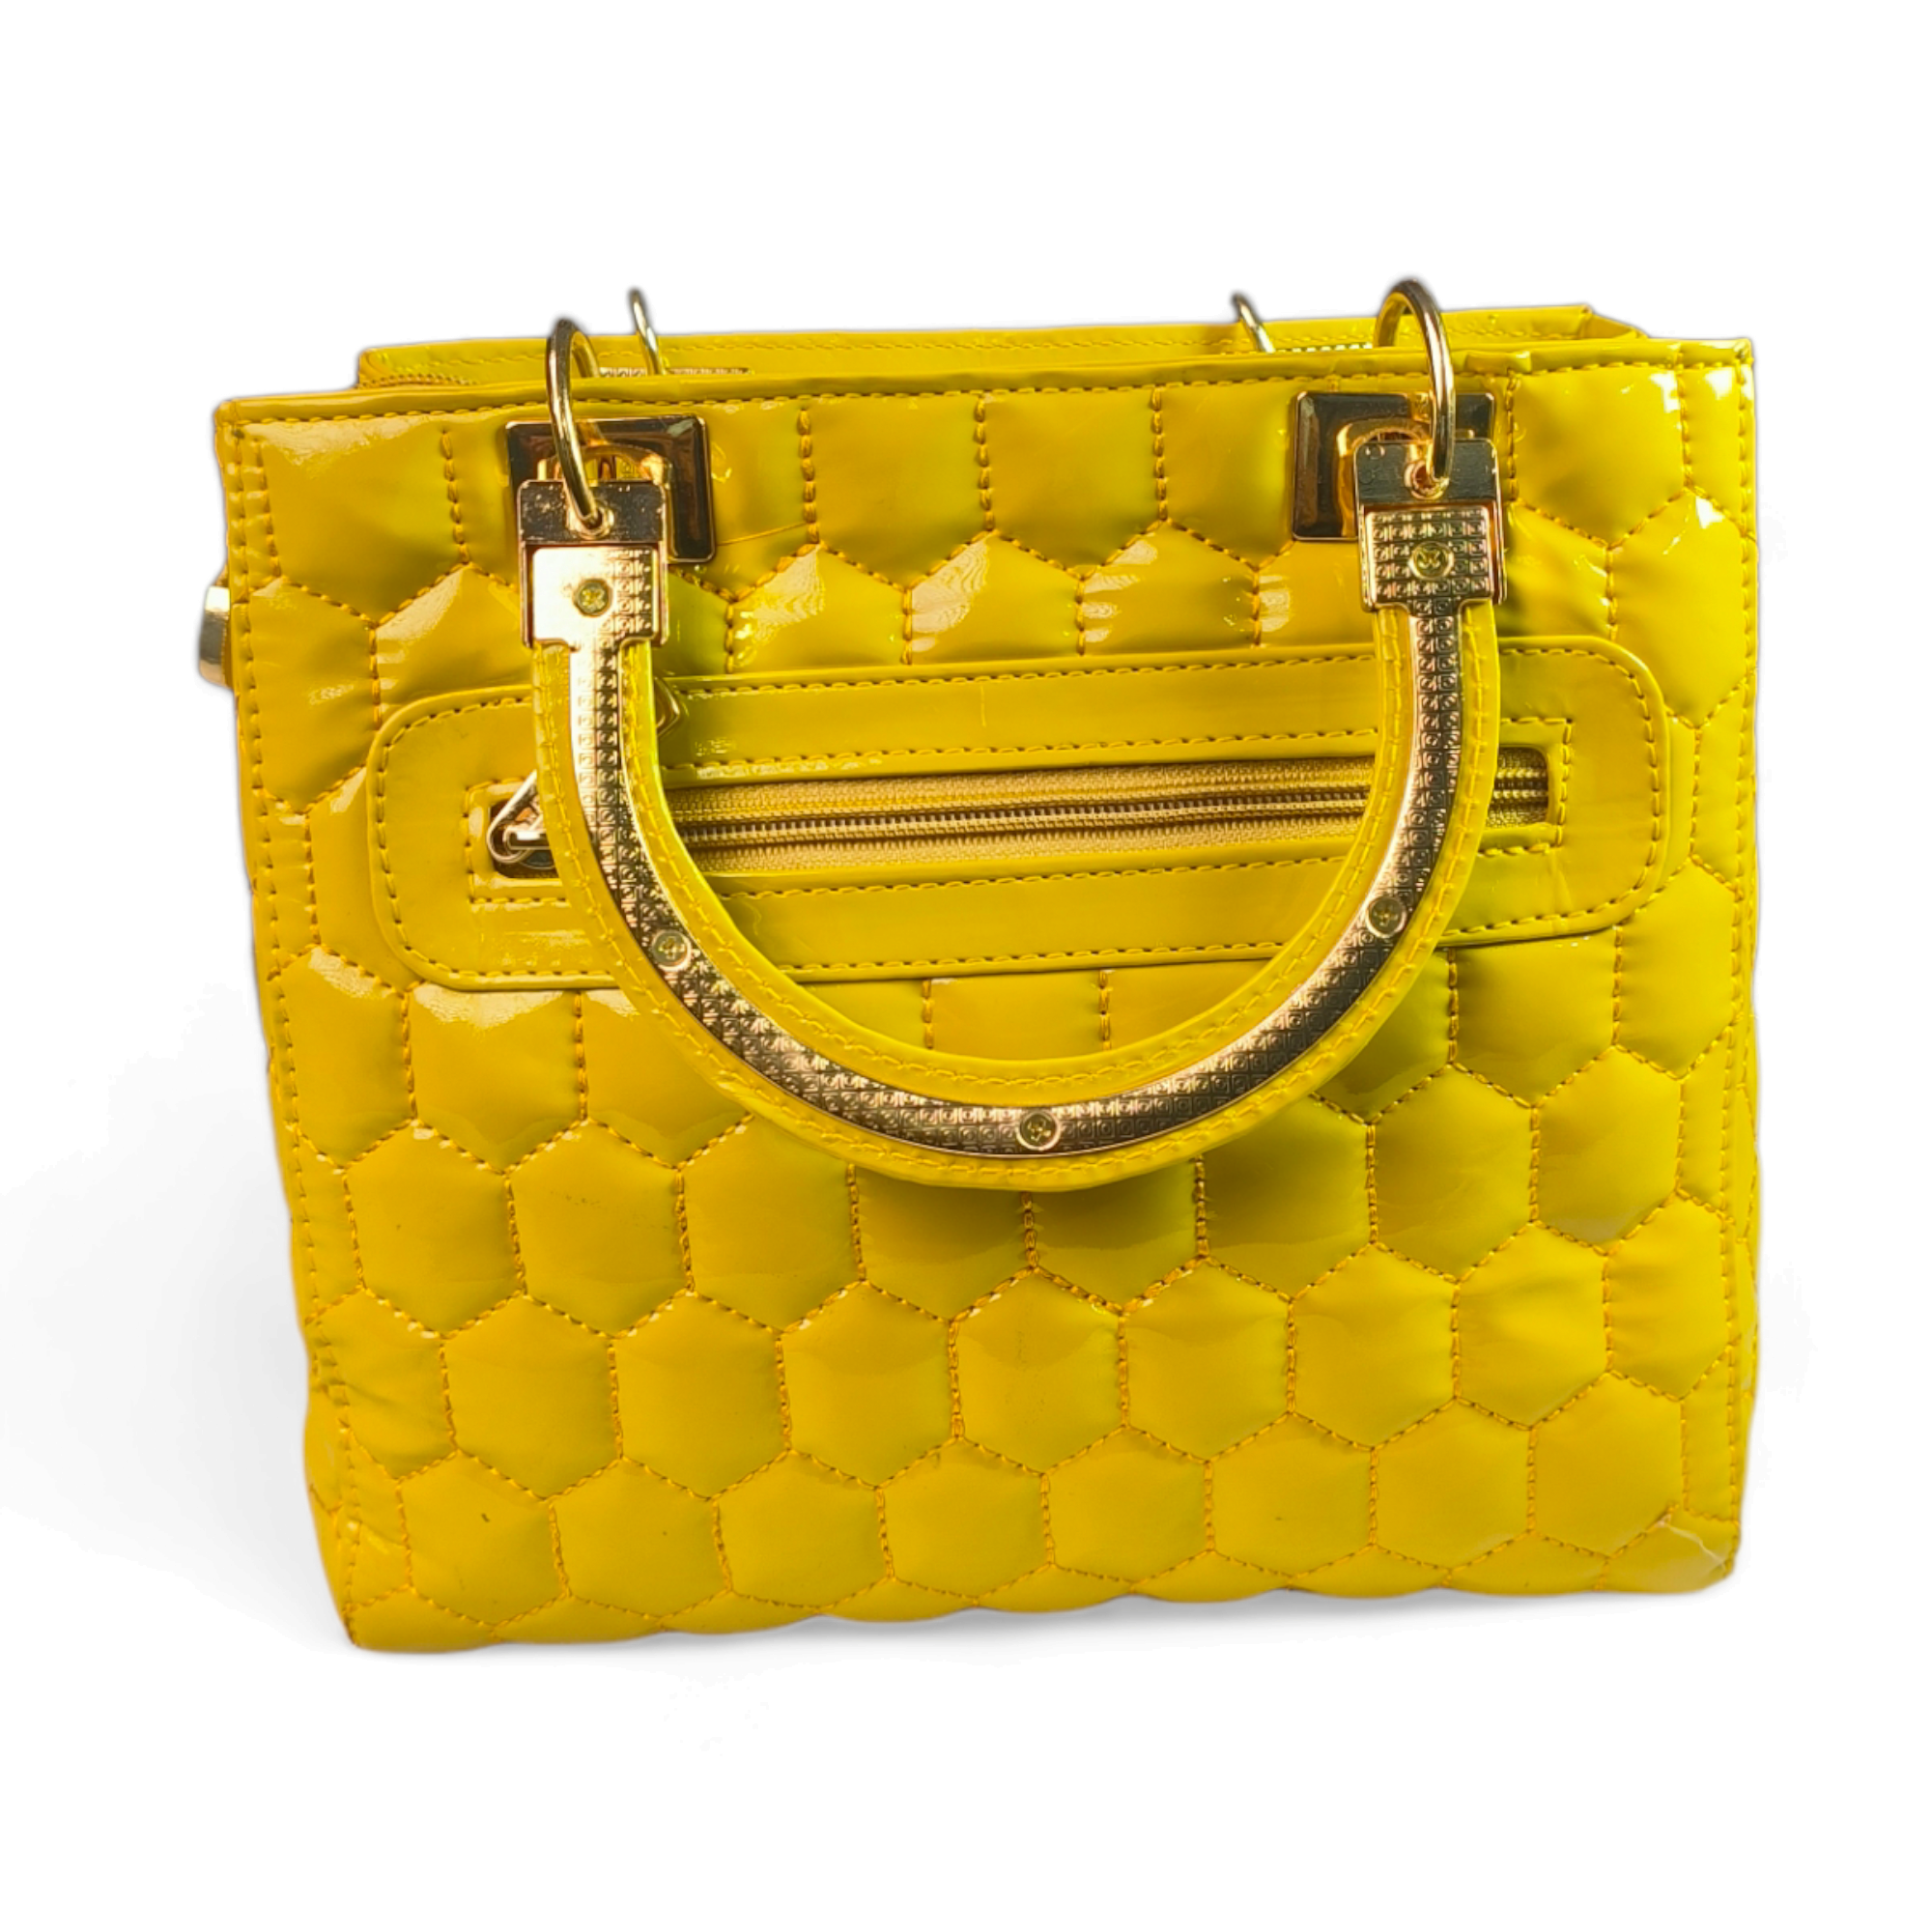 Buy Dacto2pick Fancy Handbag for Girls | Women's Soft Pu Leather Handbag |  Women Fashion Handbags | Tote Bag Shoulder Bag Top Handle Satchel Purse |  Large Capacity Designer Bag for Ladies (